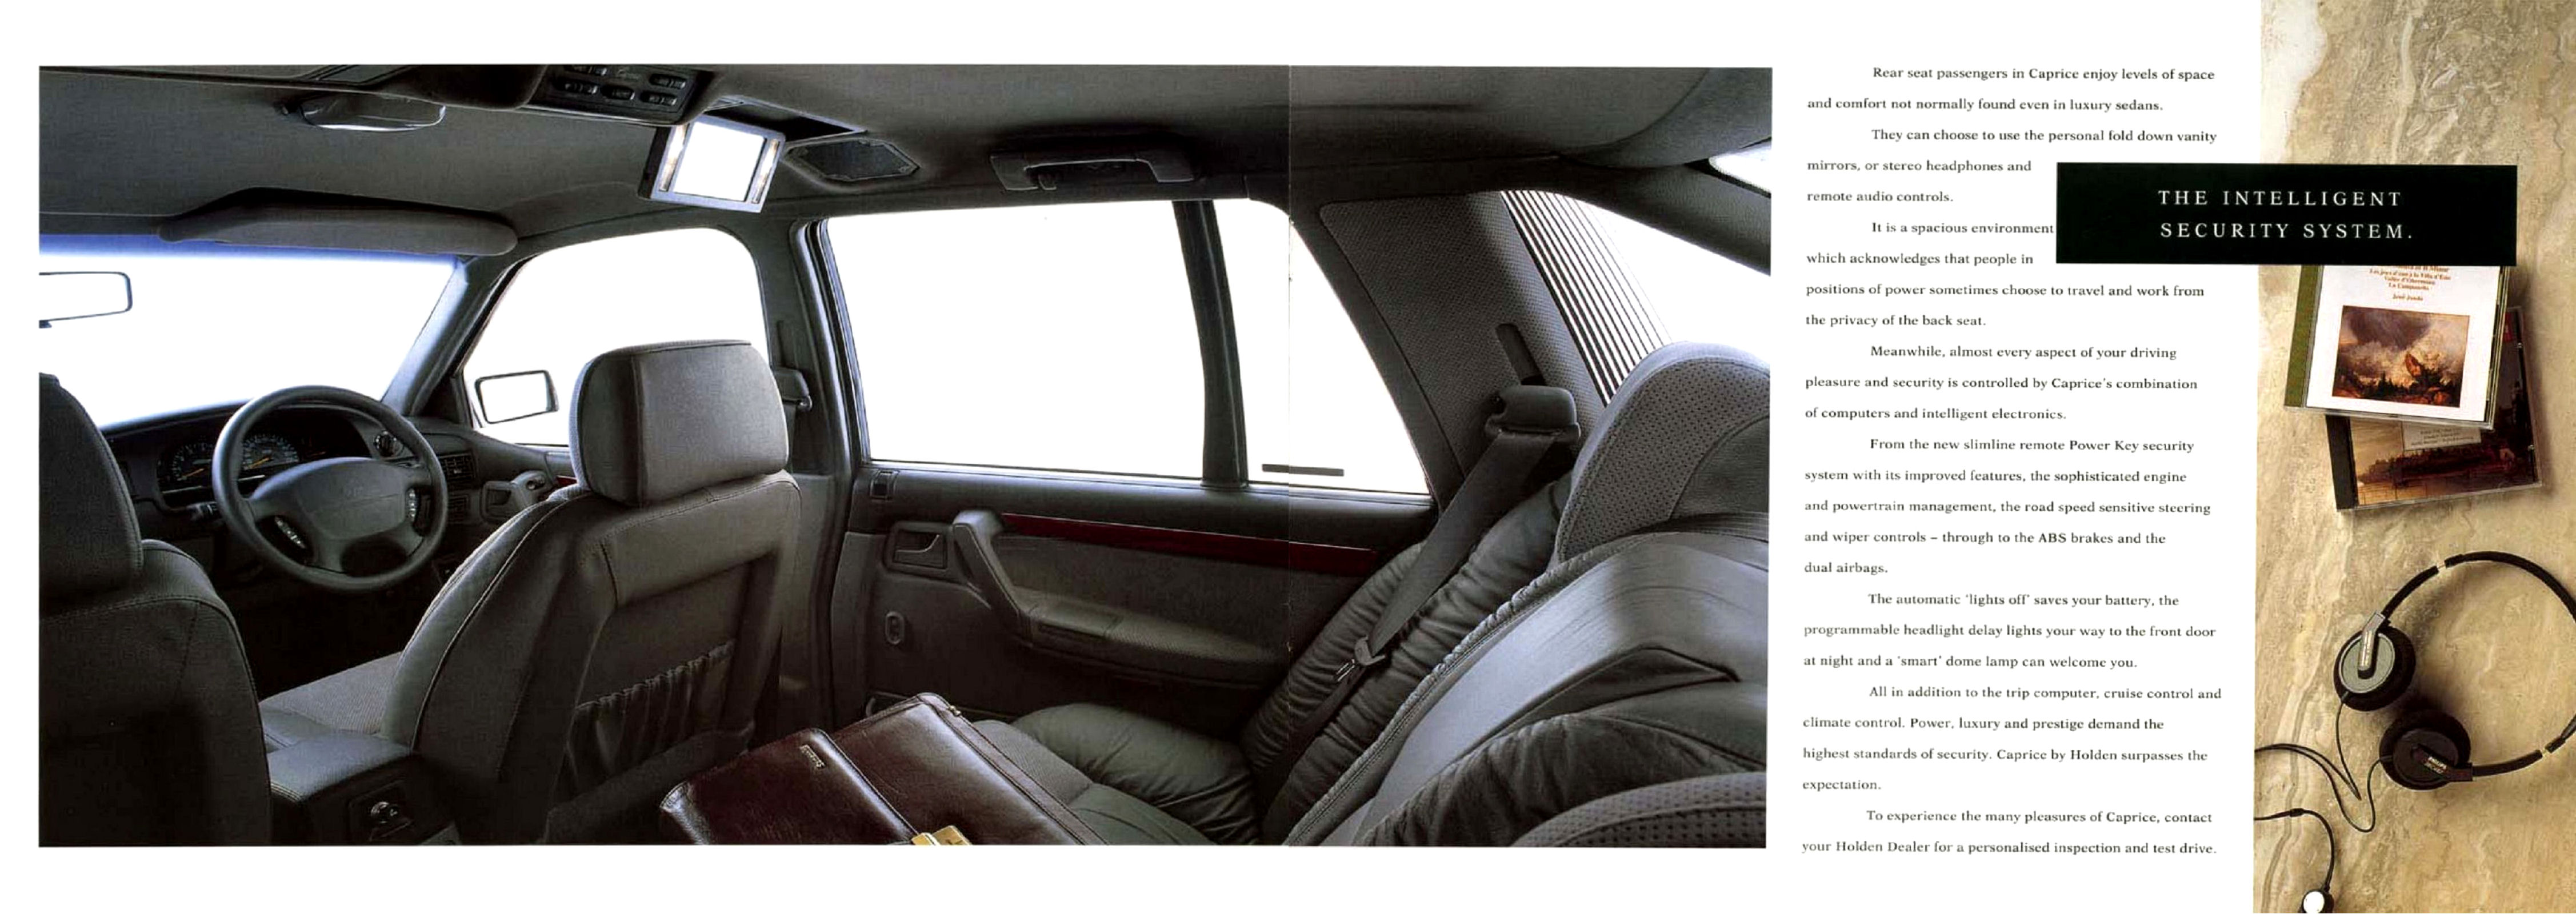 1995 Holden VS Caprice (Aus)-12-13